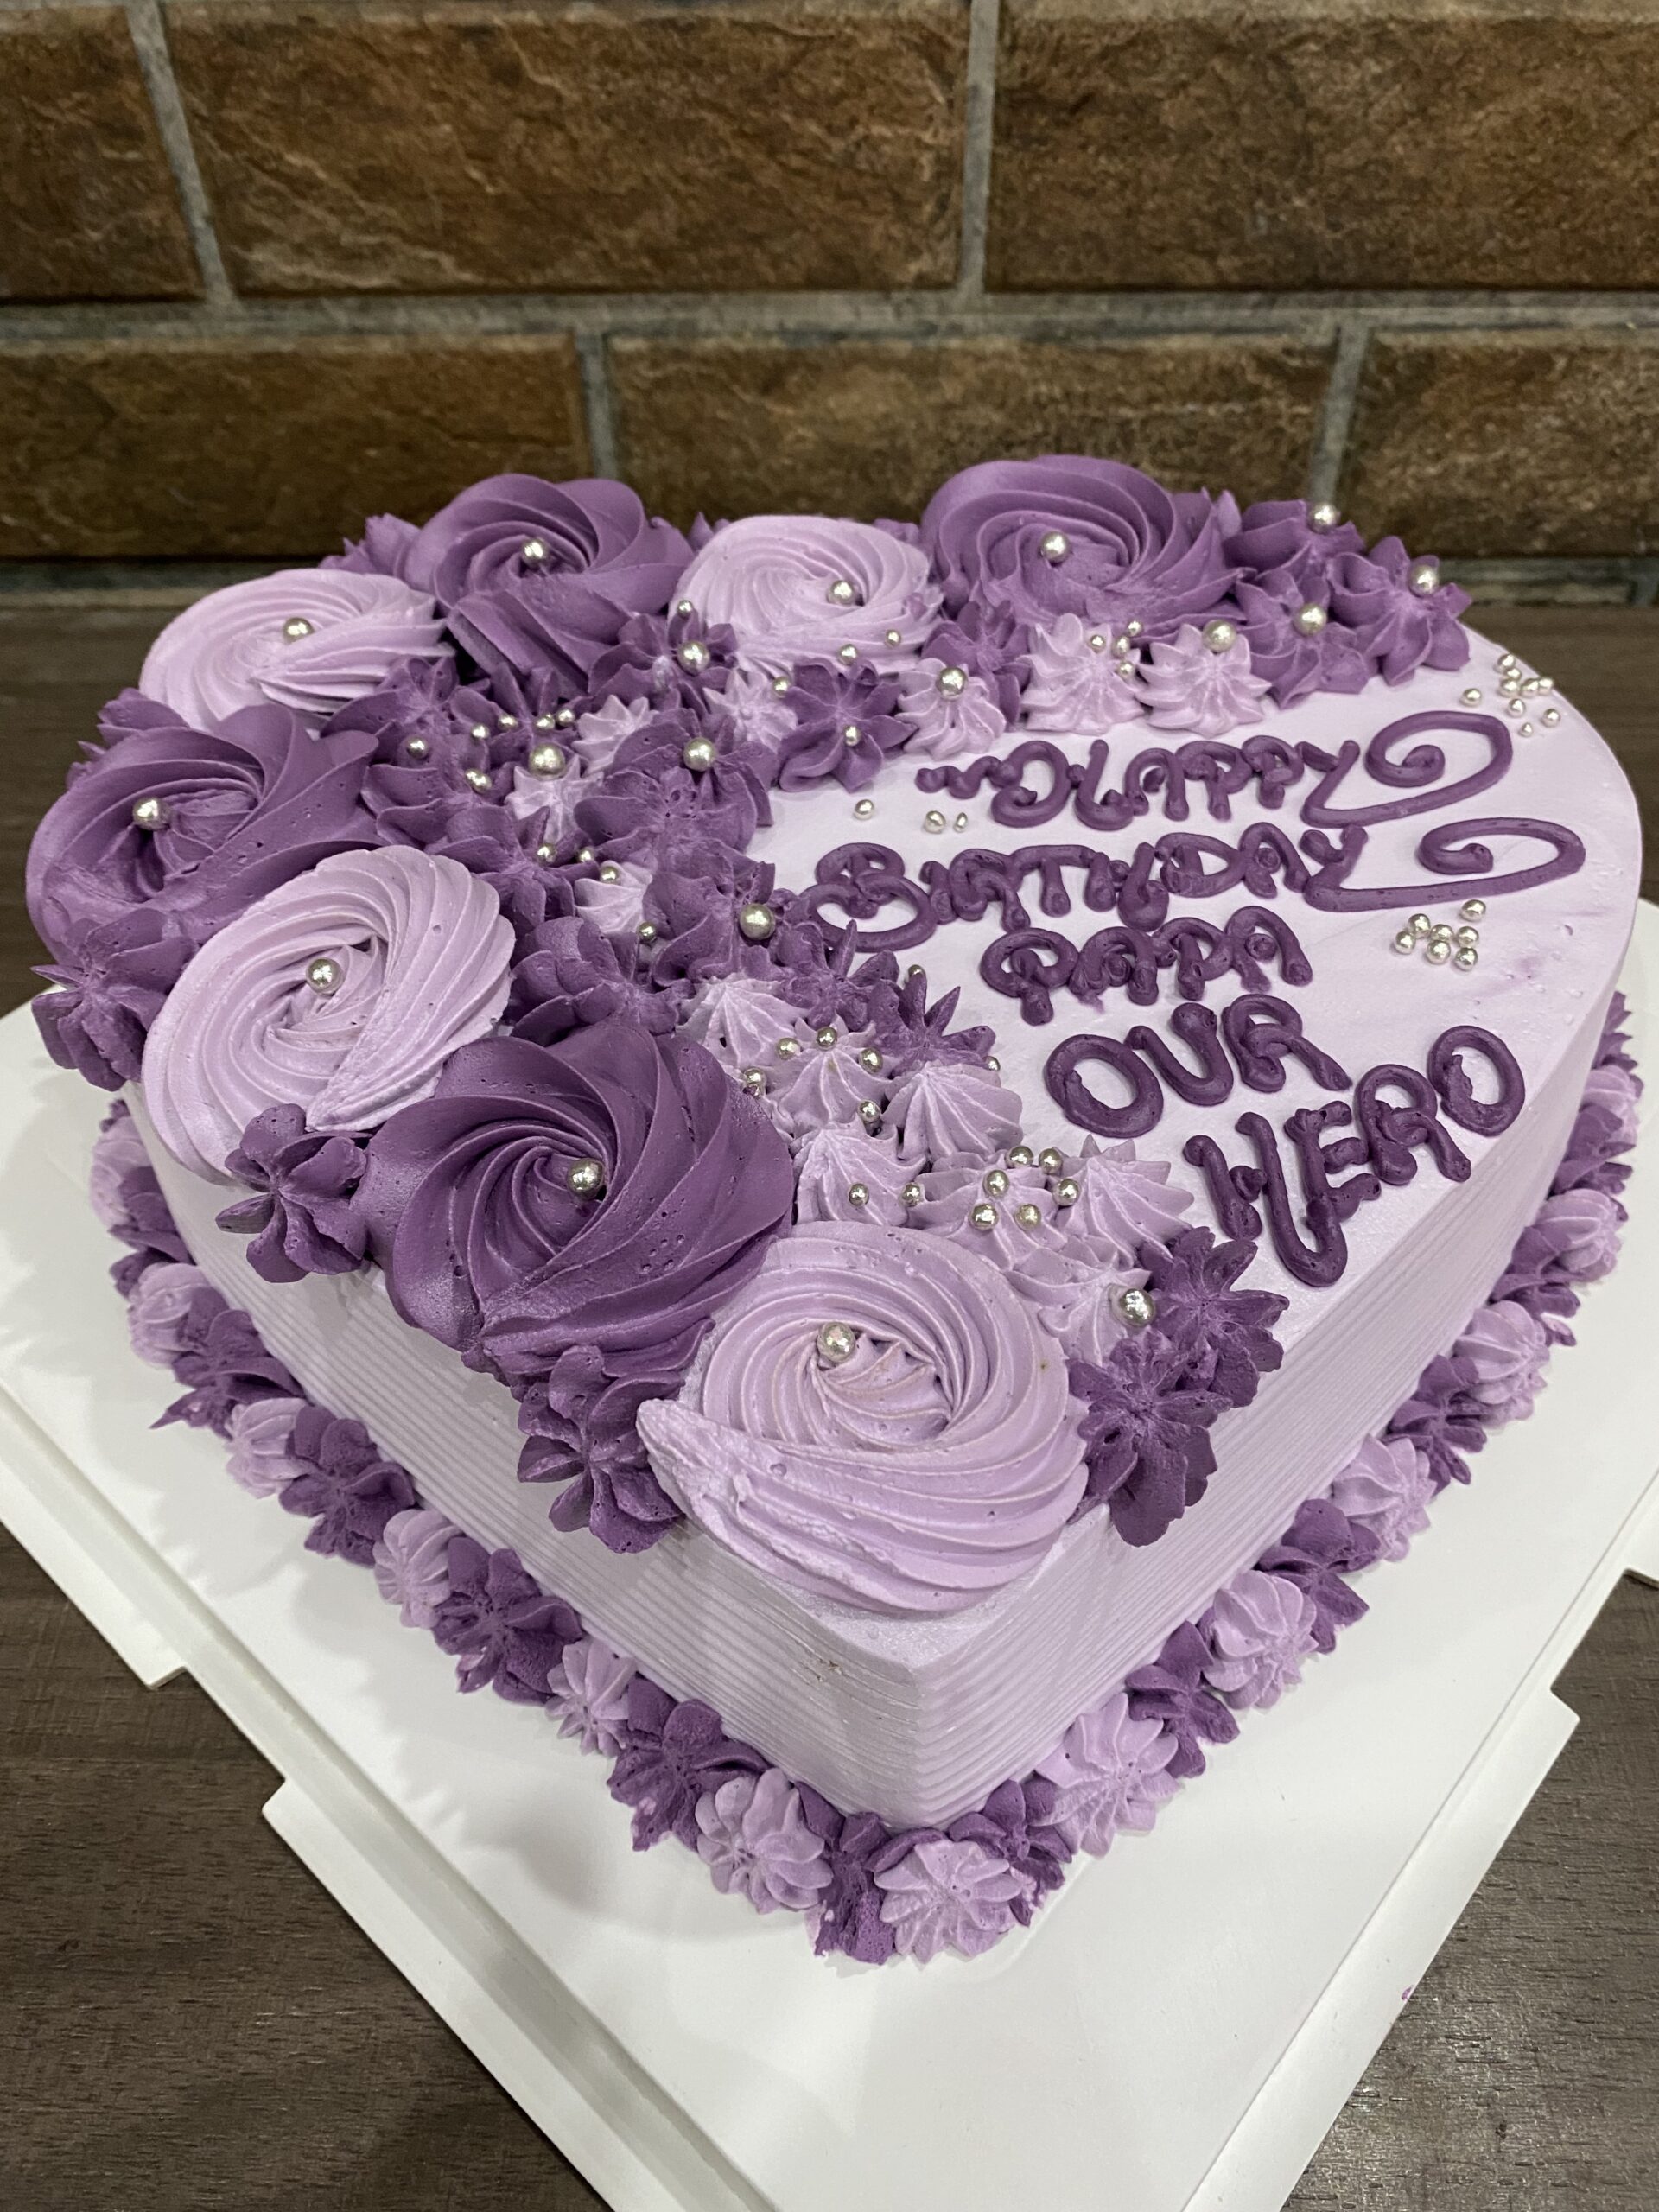 Pretty cake decorating designs we've bookmarked : 1st birthday soft purple  cake